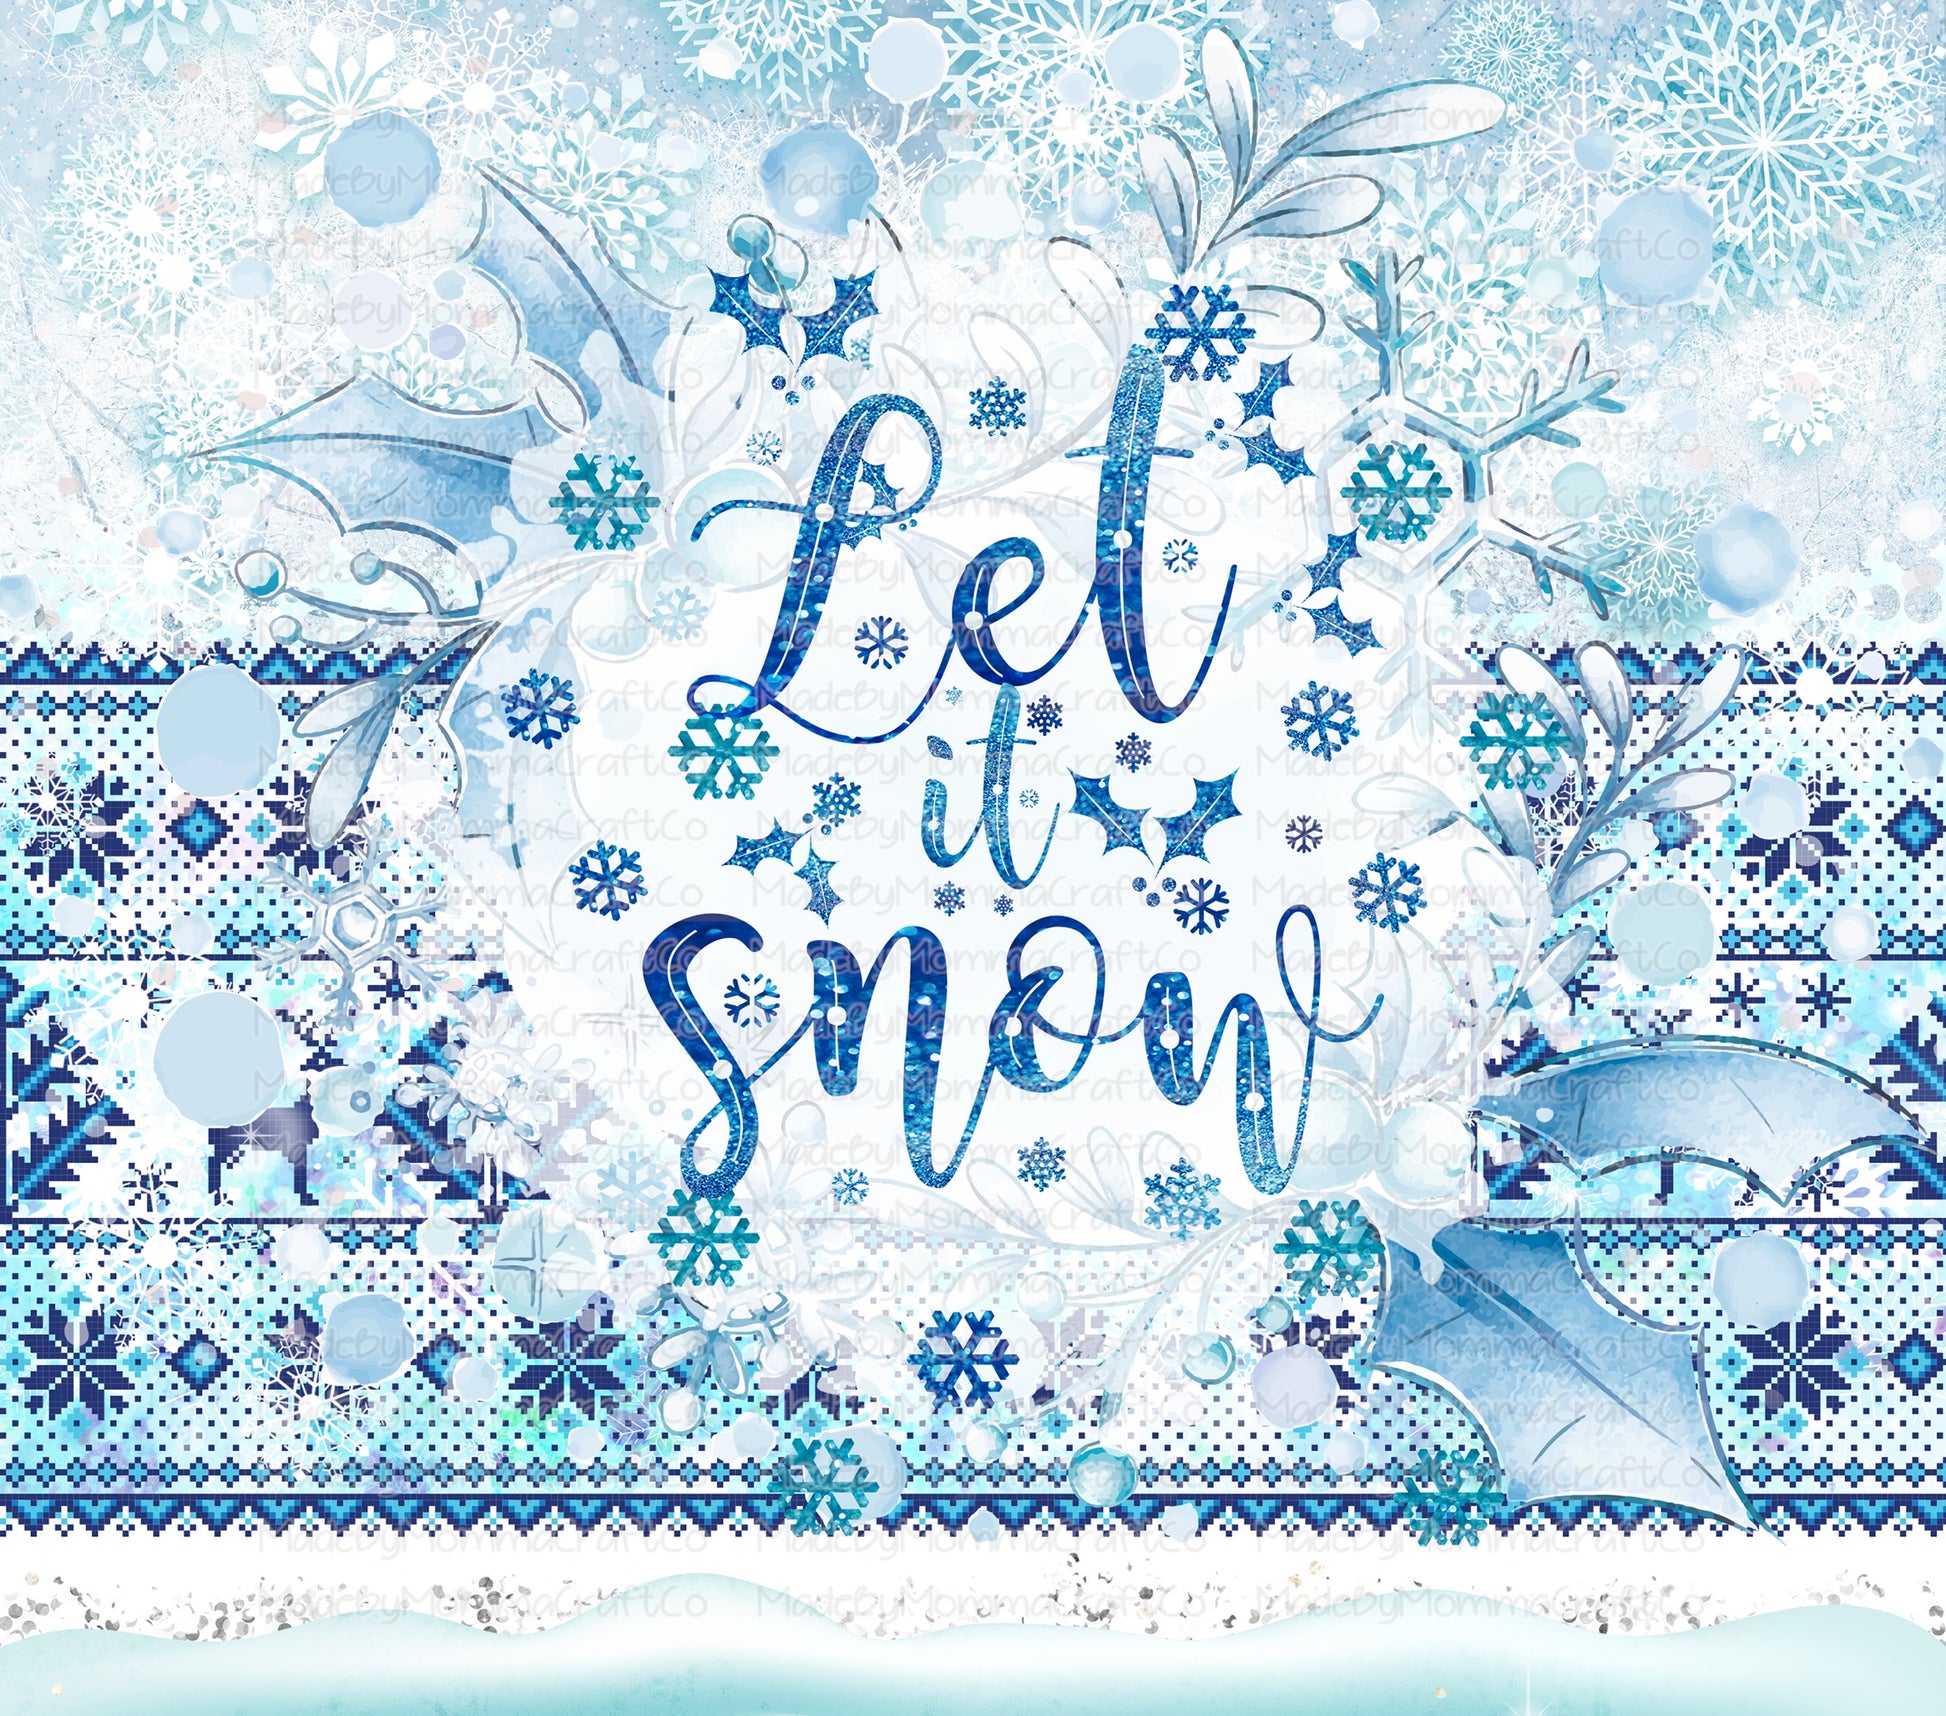 Let It Snow (Vinyl)